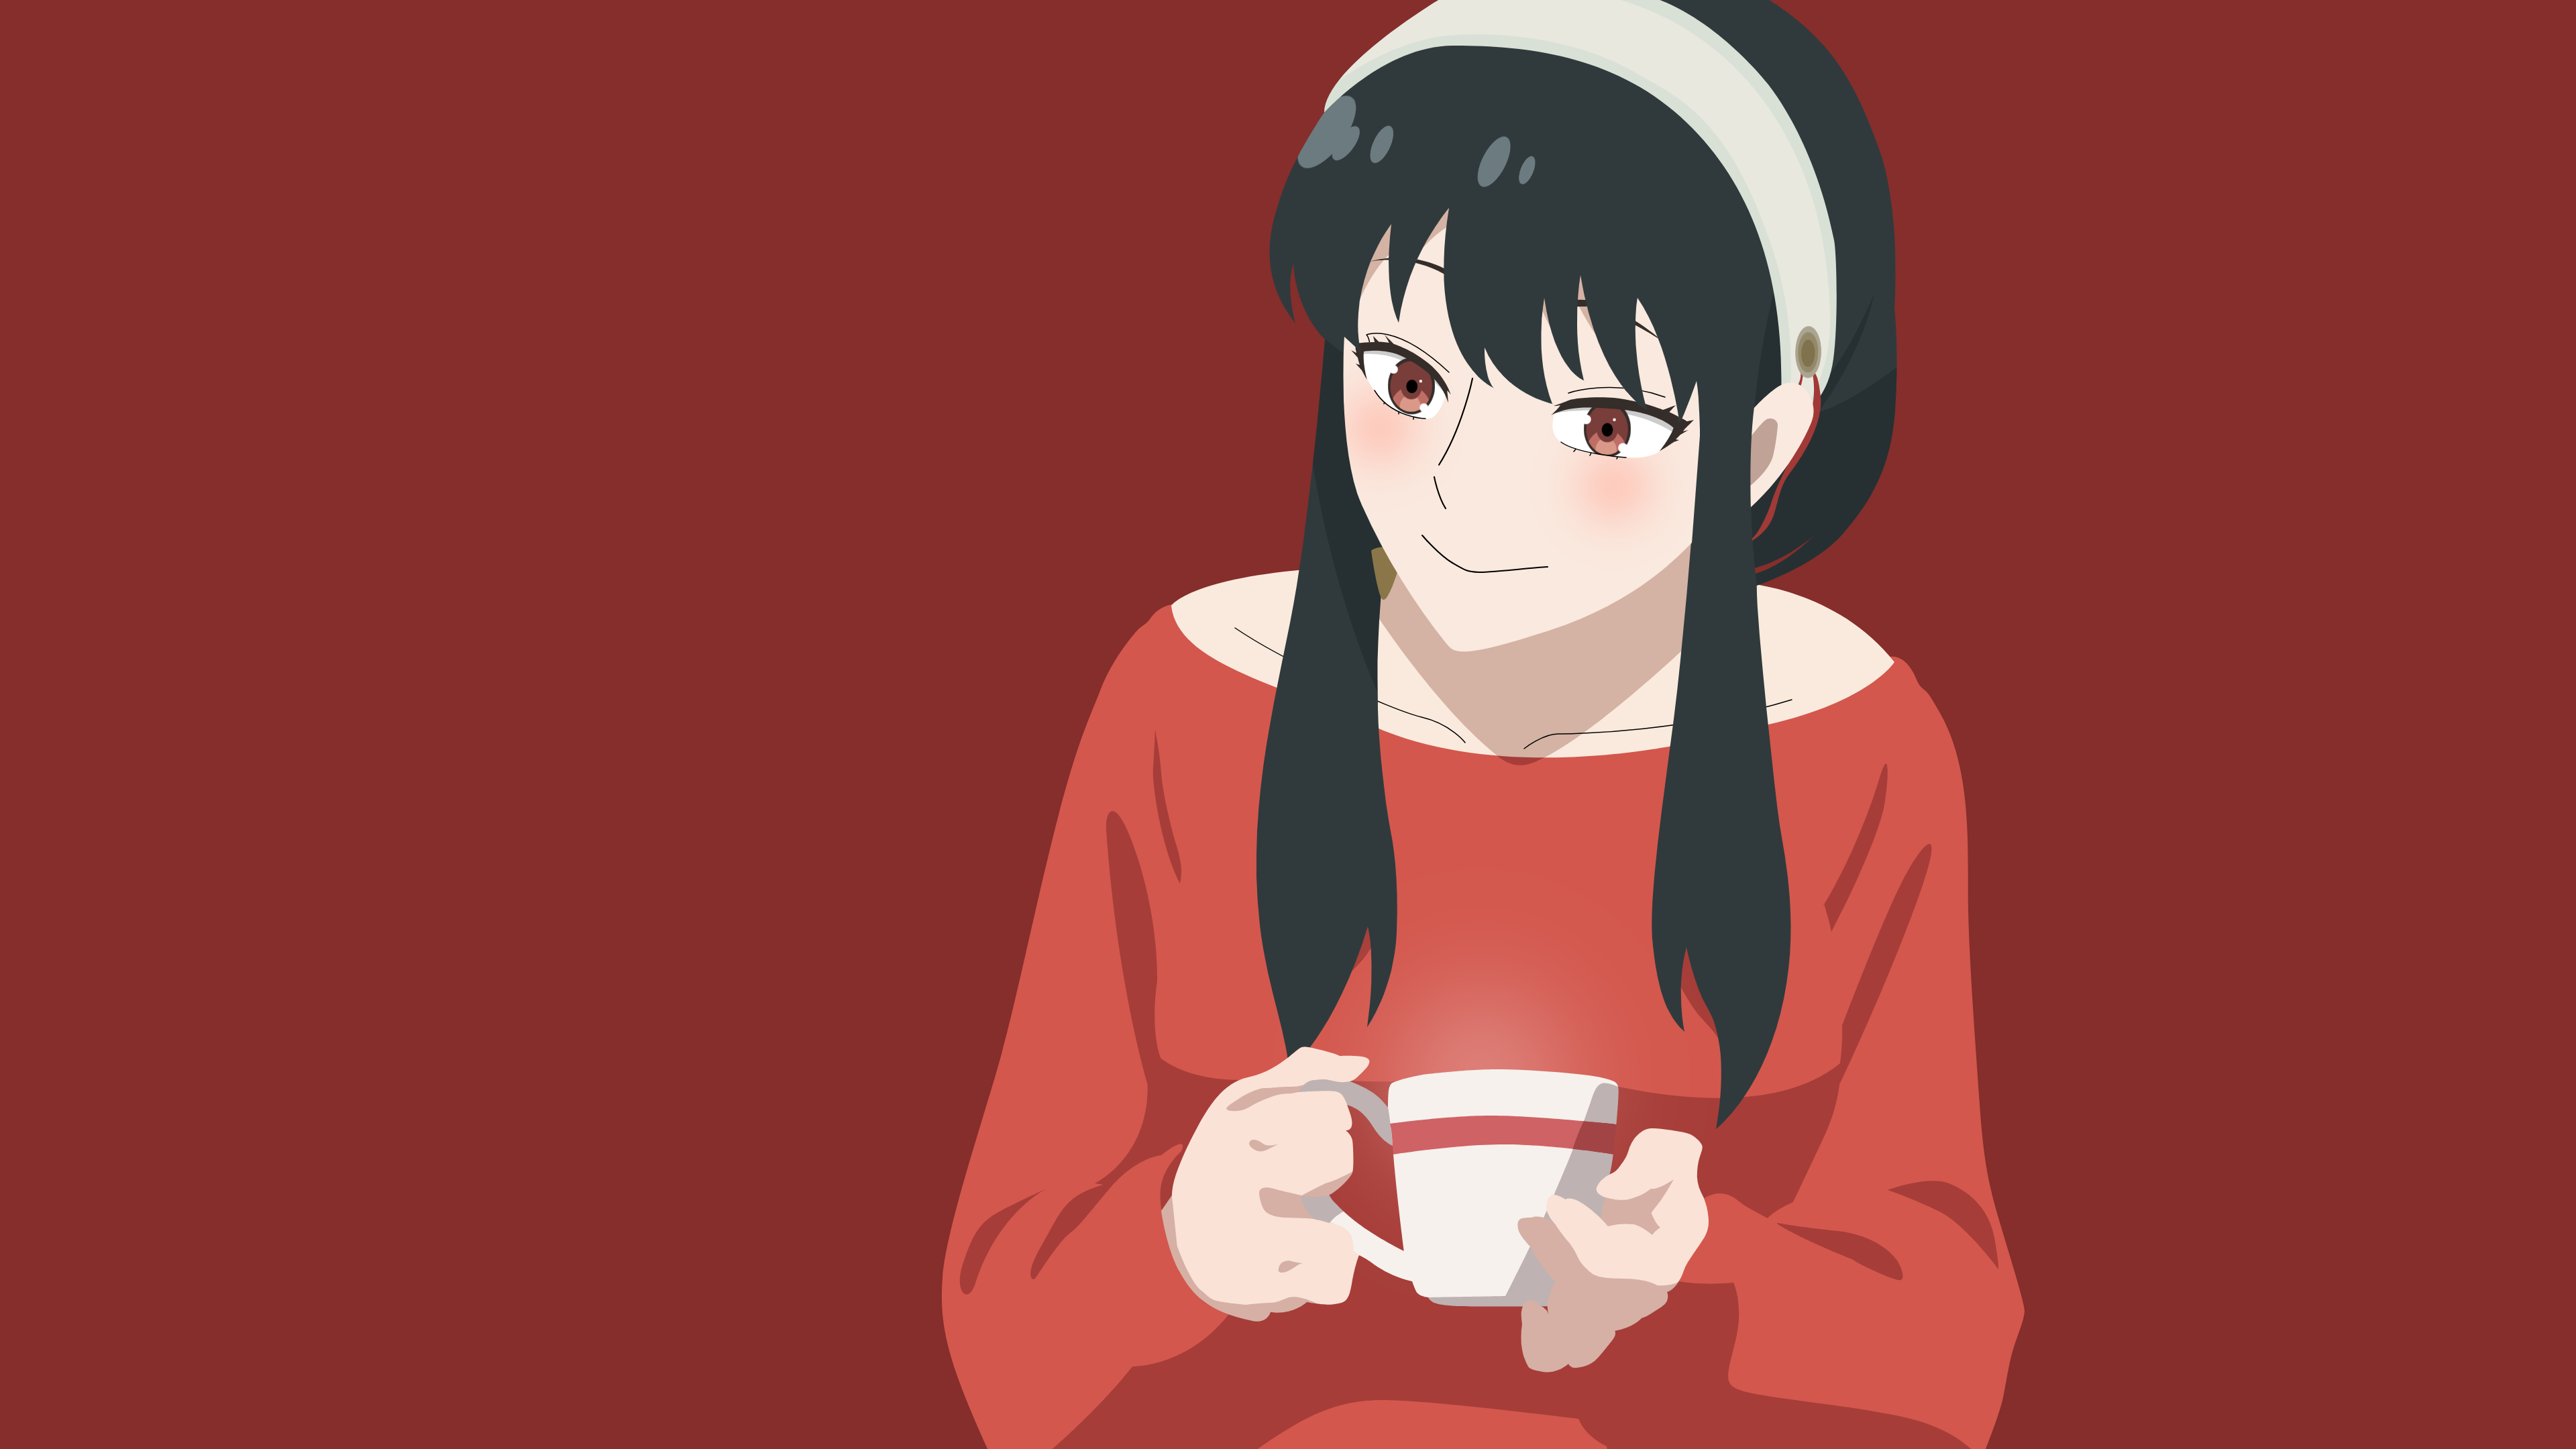 Anime 3840x2160 Yor Forger Spy x Family minimalism fan art anime girls anime red background simple background